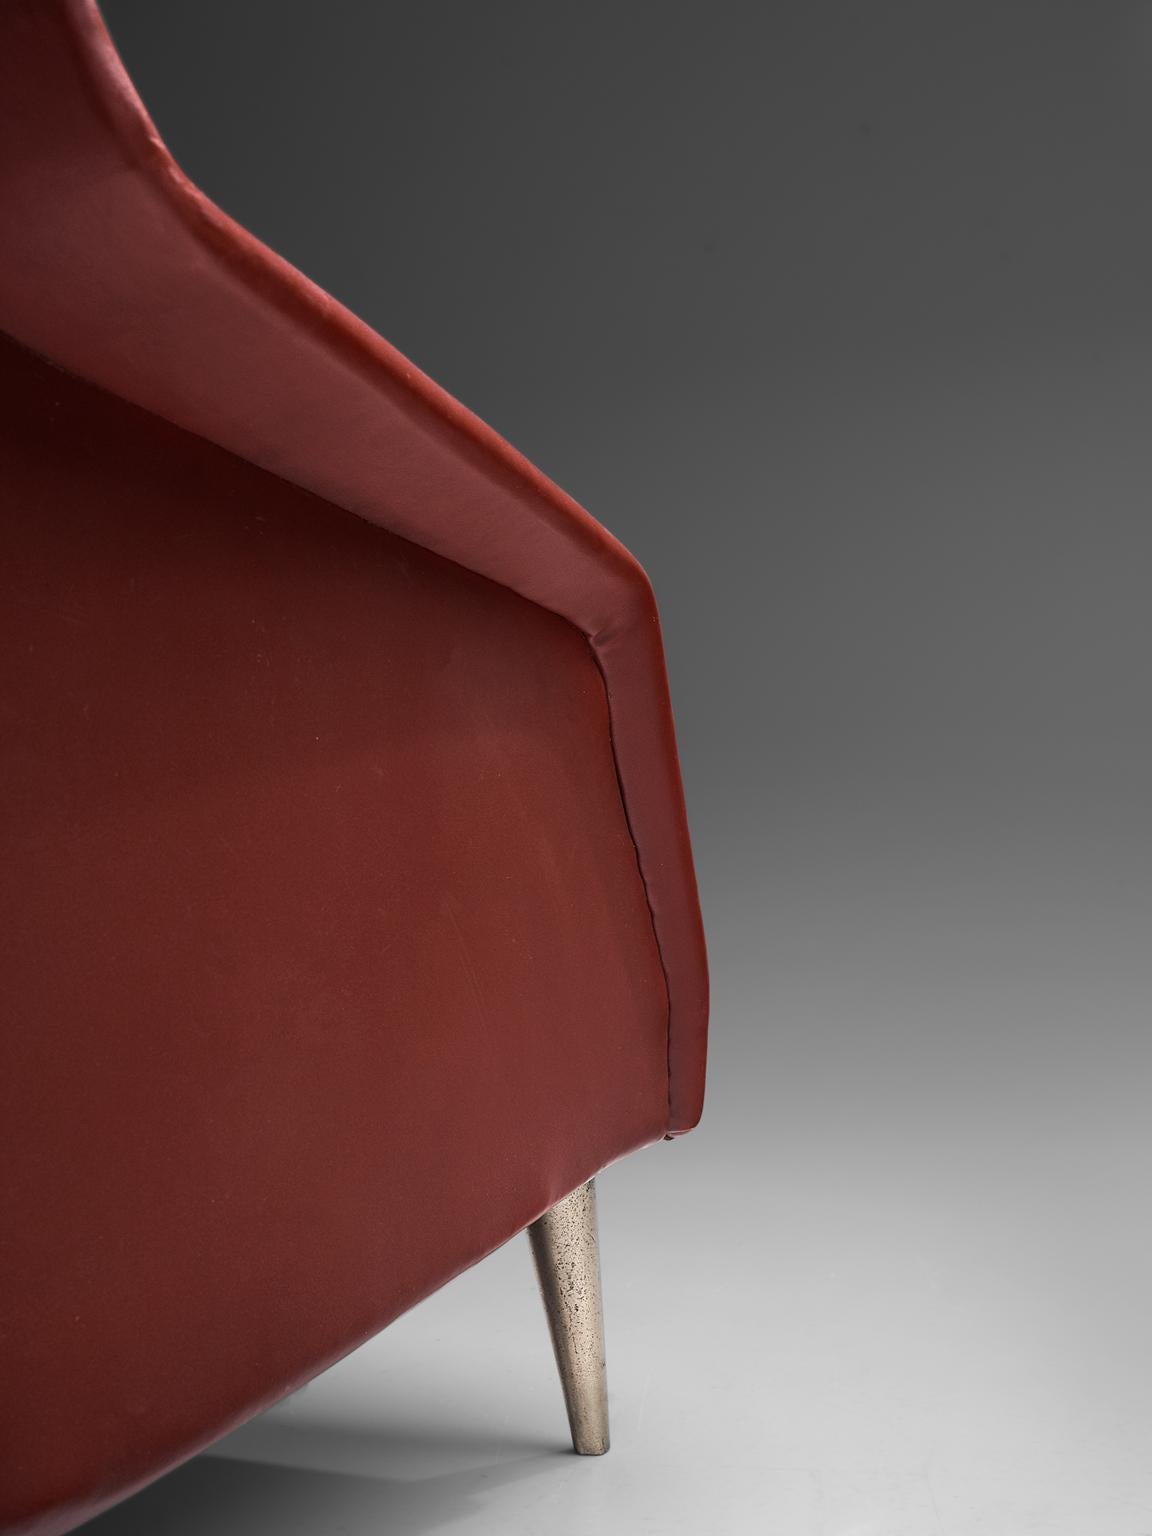 Brass Carlo de Carli Classic Red Lounge Chairs